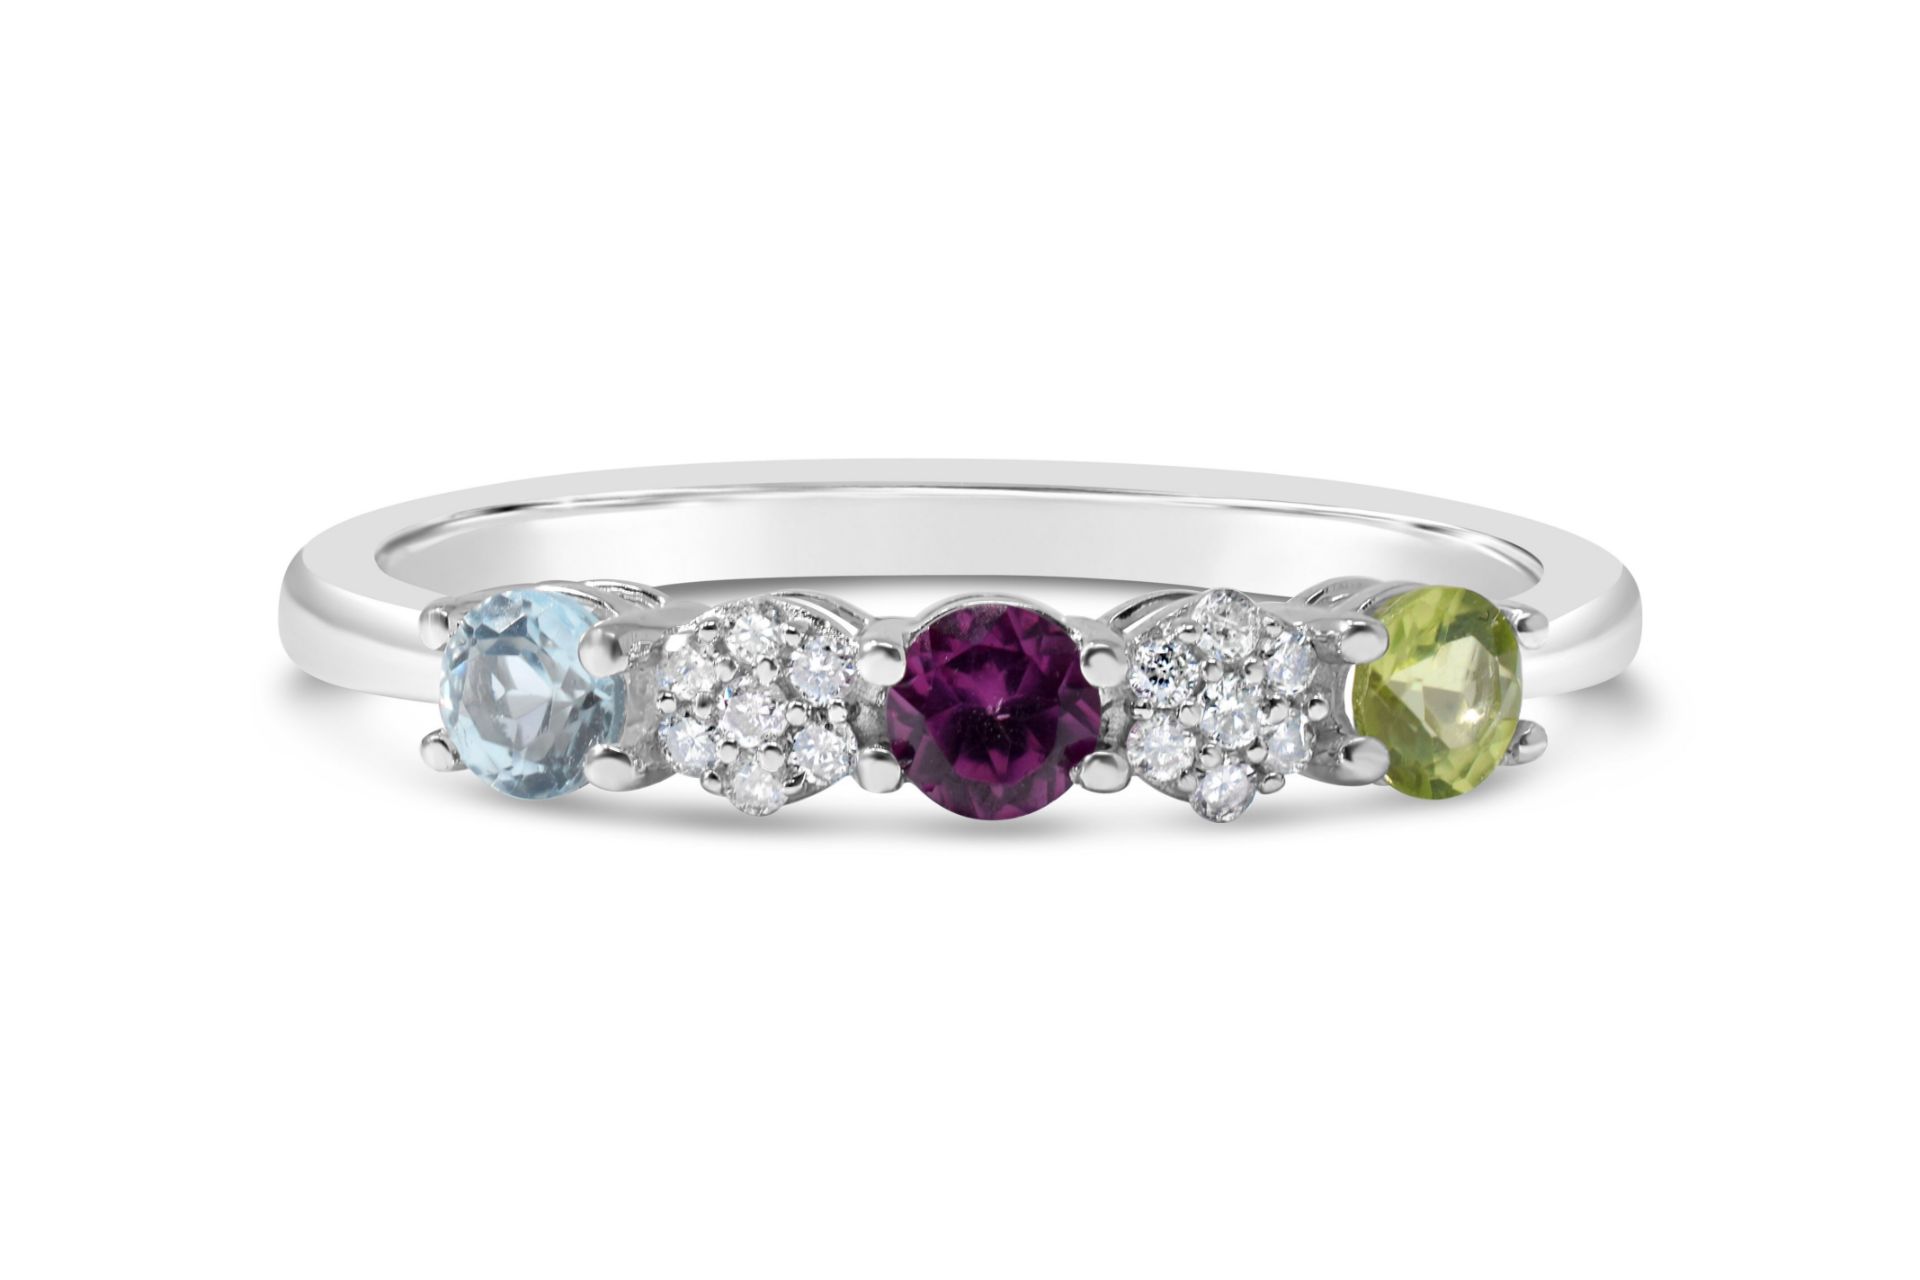 Multicoloured gem stone with diamond eternity ring - Image 2 of 2